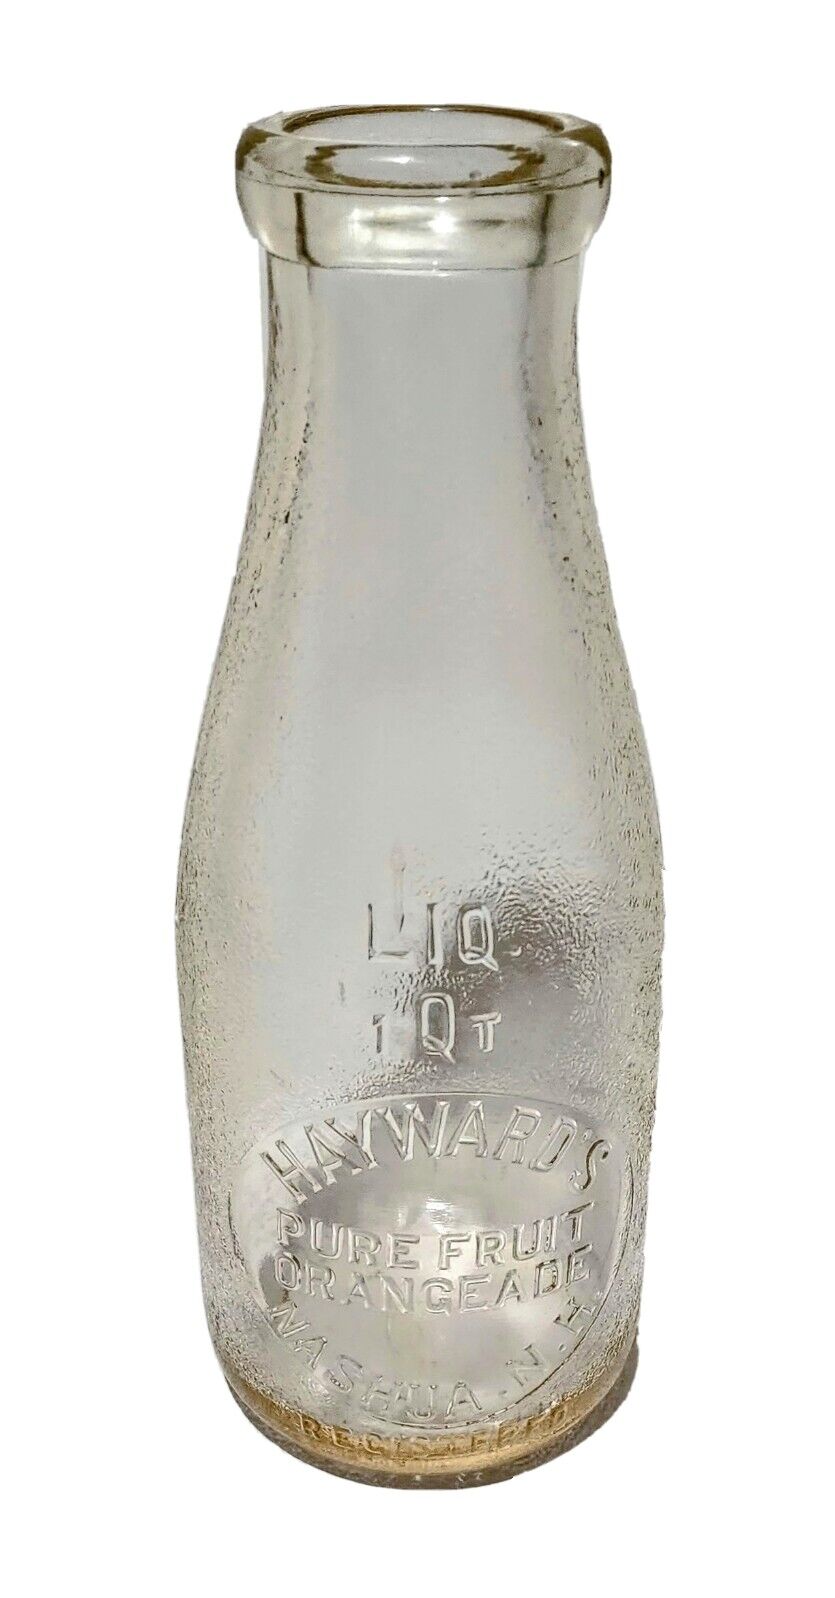 Rare Embossed HAYWARD'S PURE FRUIT ORANGEADE NASHUA, NH 1 Qt Glass Milk Bottle 